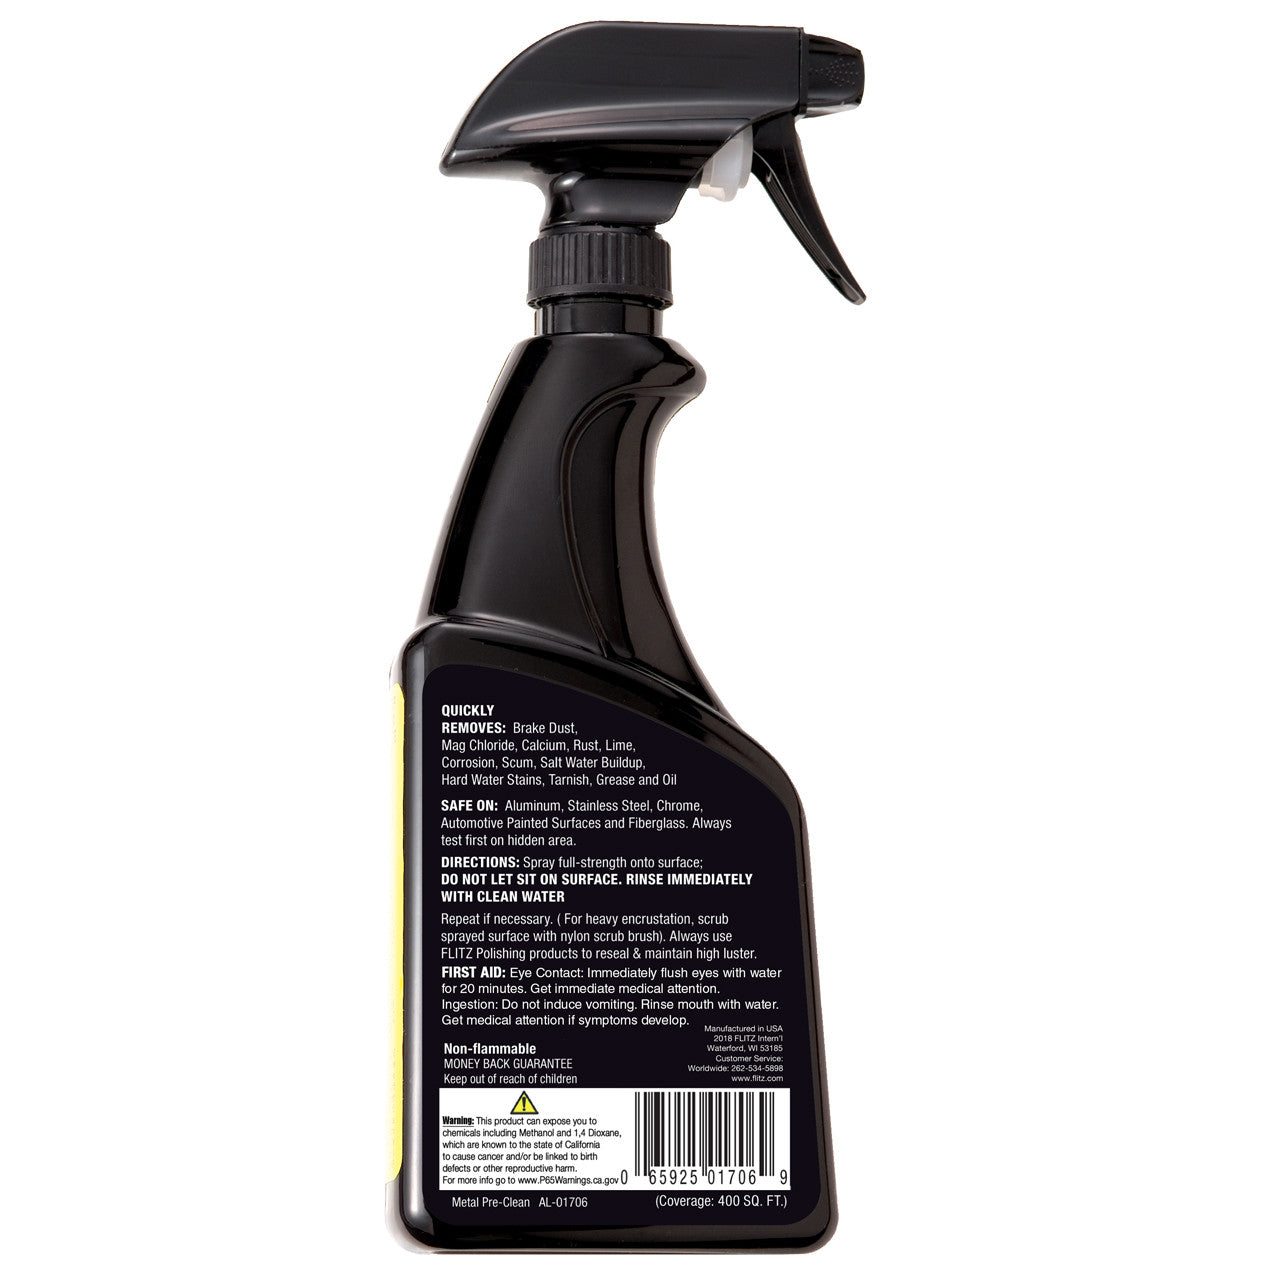 Flitz All Metal Pre Clean Spray, 16 oz Spray Bottle #AL01706